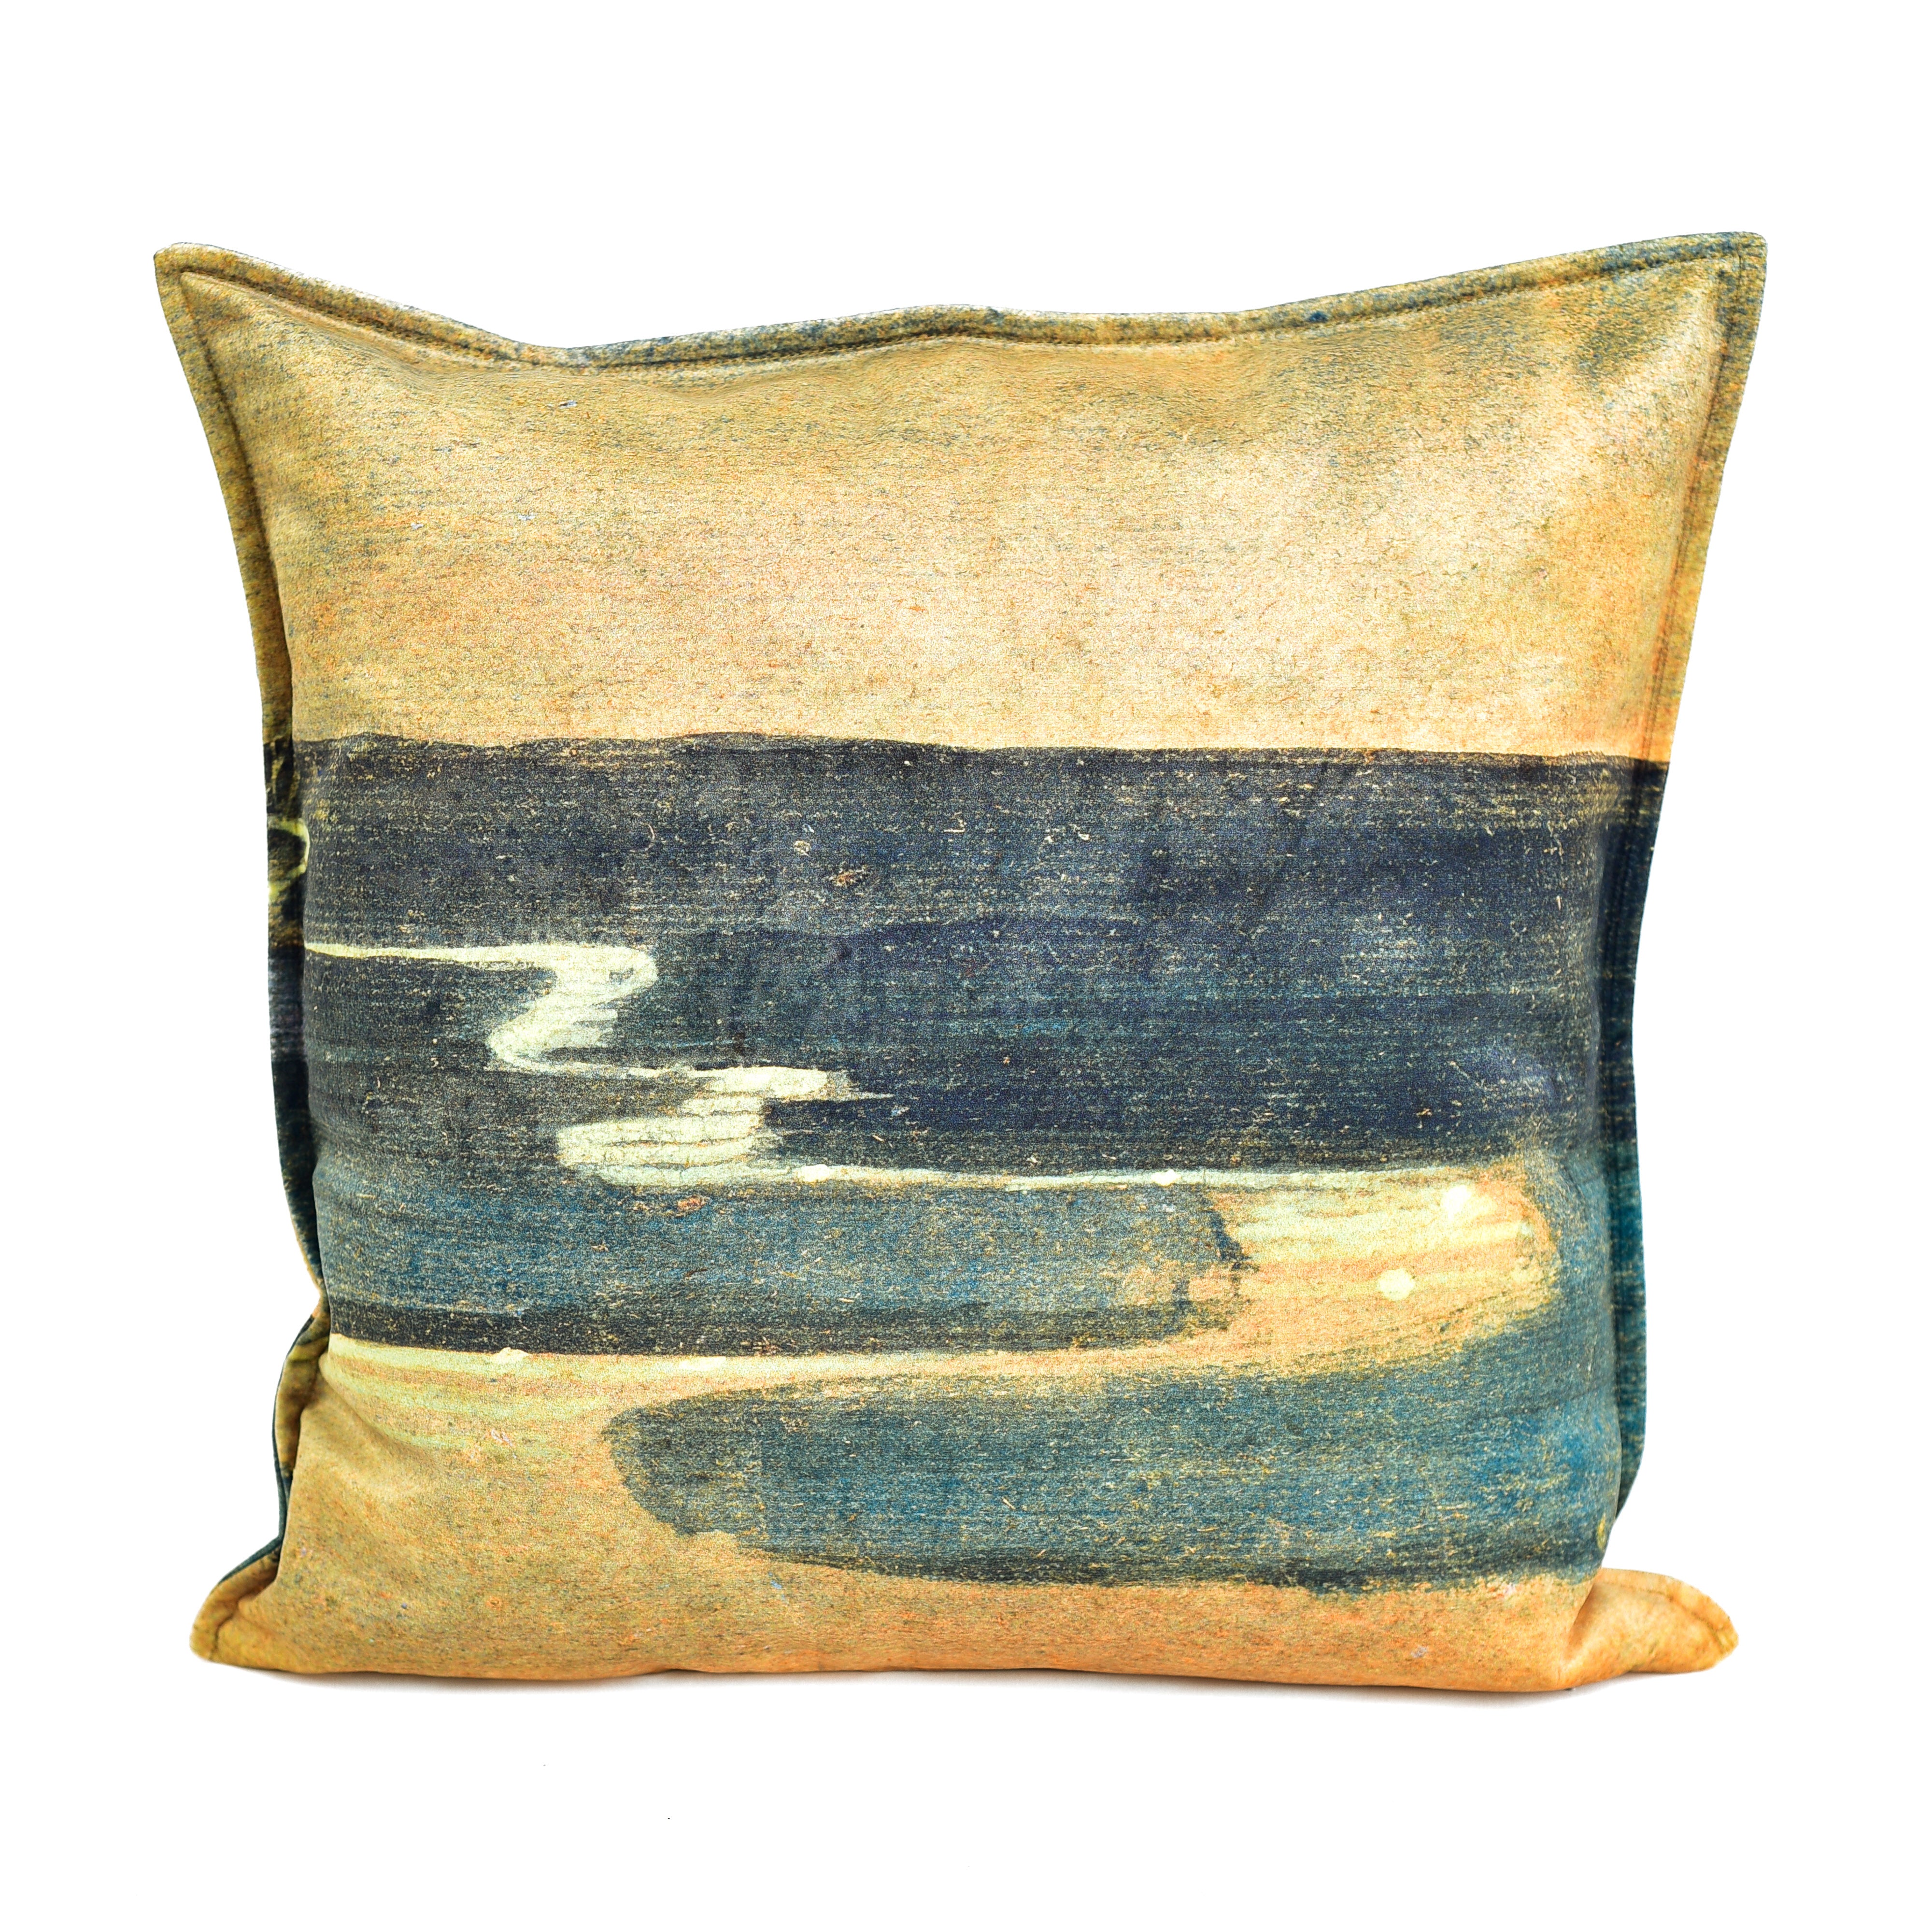 Decorative cushion M. K. Čiurlionis "The sun goes under the sign of Aquarius"